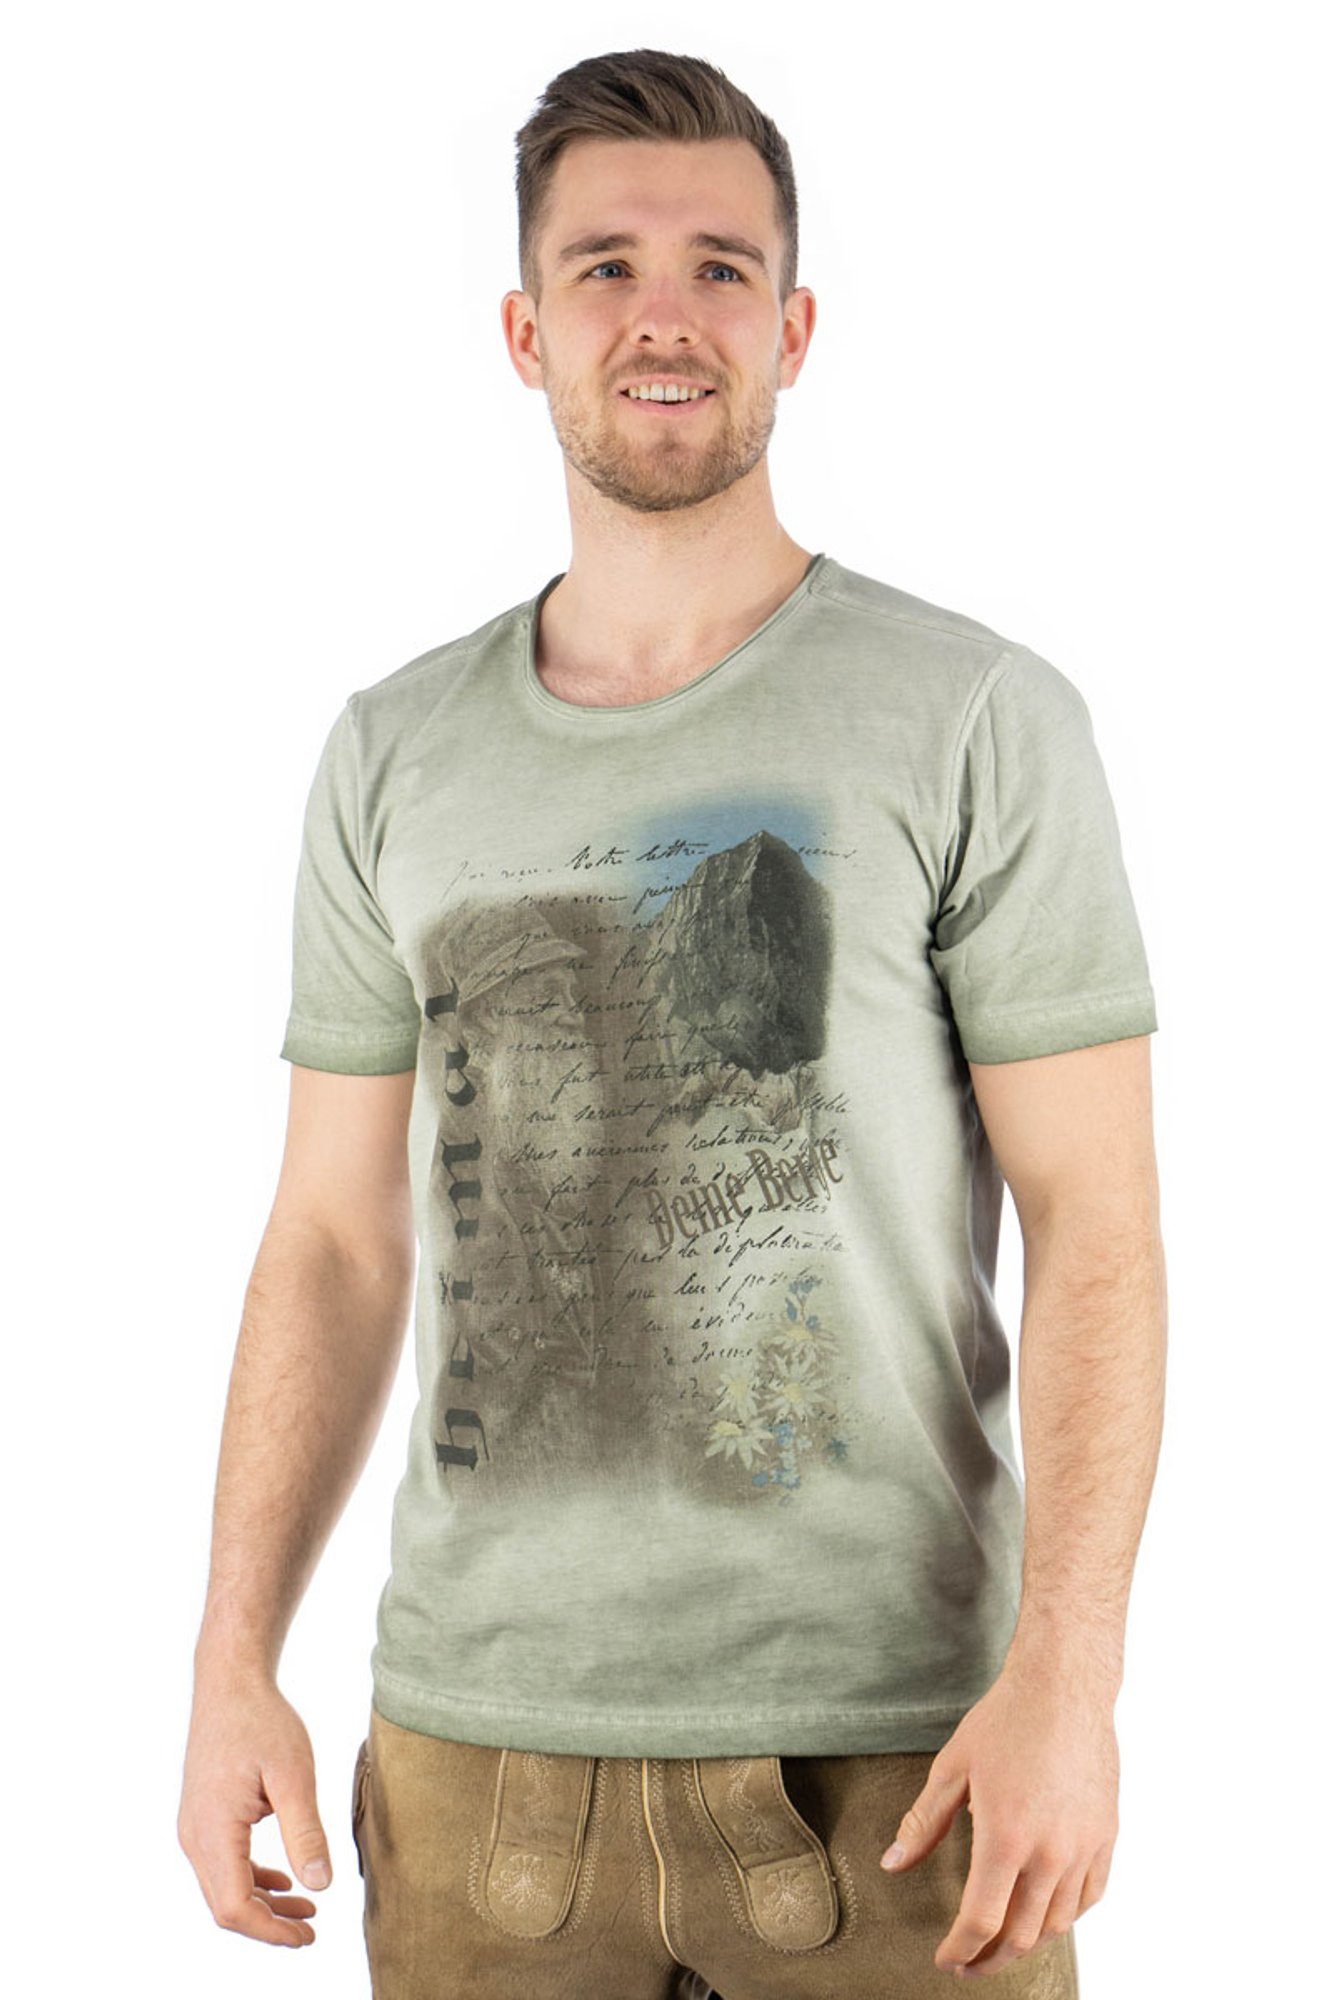 OS-Trachten Trachtenshirt Praiol Kurzarm T-Shirt mit Motivdruck khaki/schlamm | Trachtenshirts